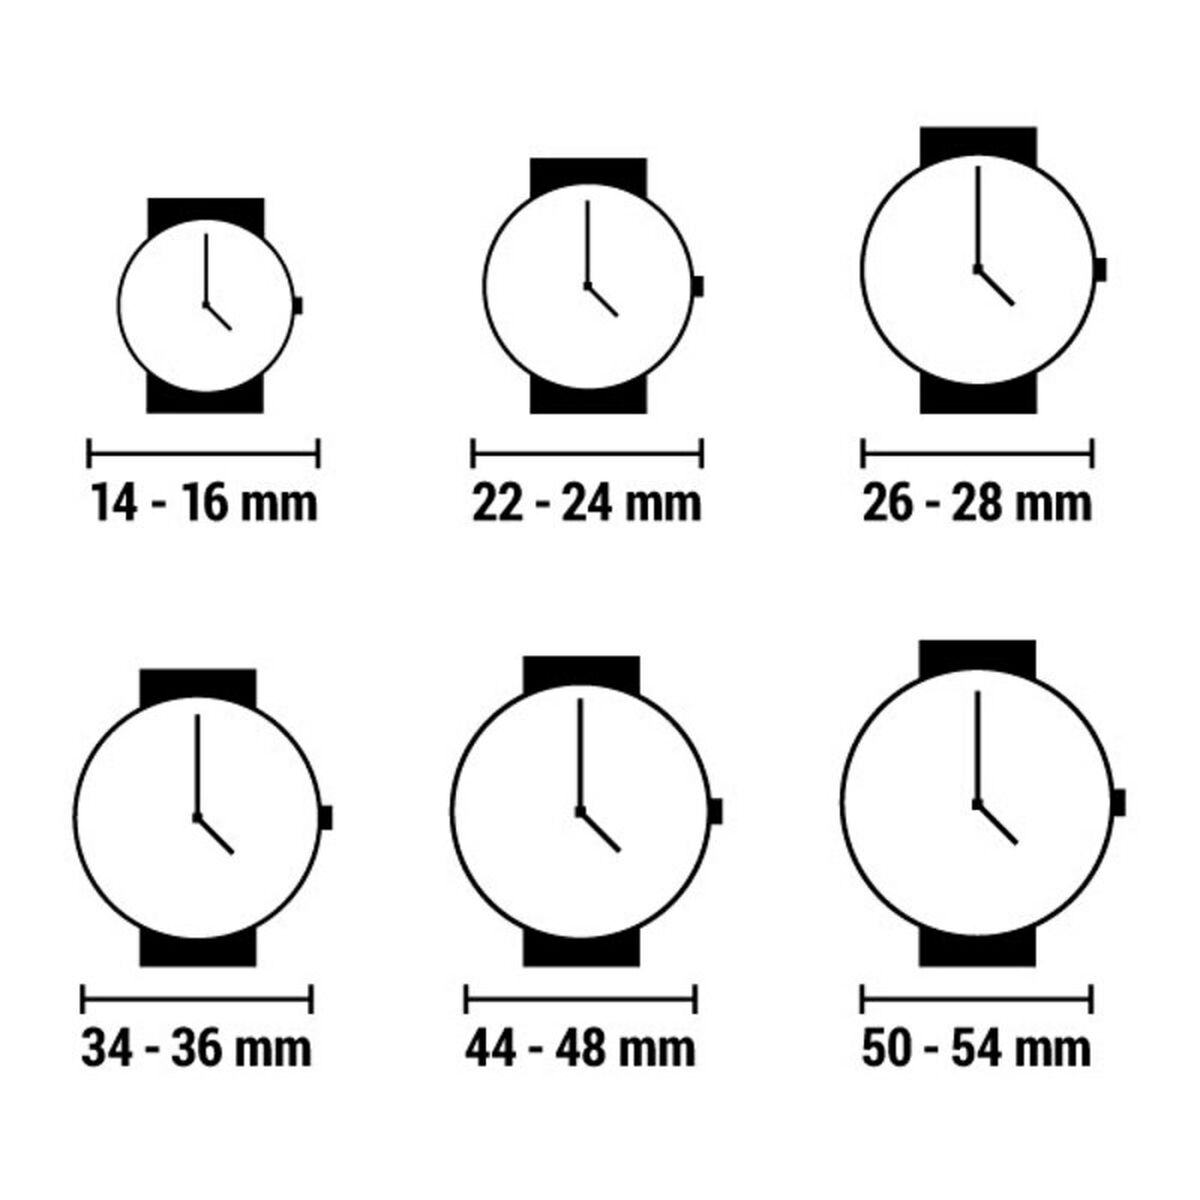 Horloge Heren Nautica NAPIBZ001 (44 mm)